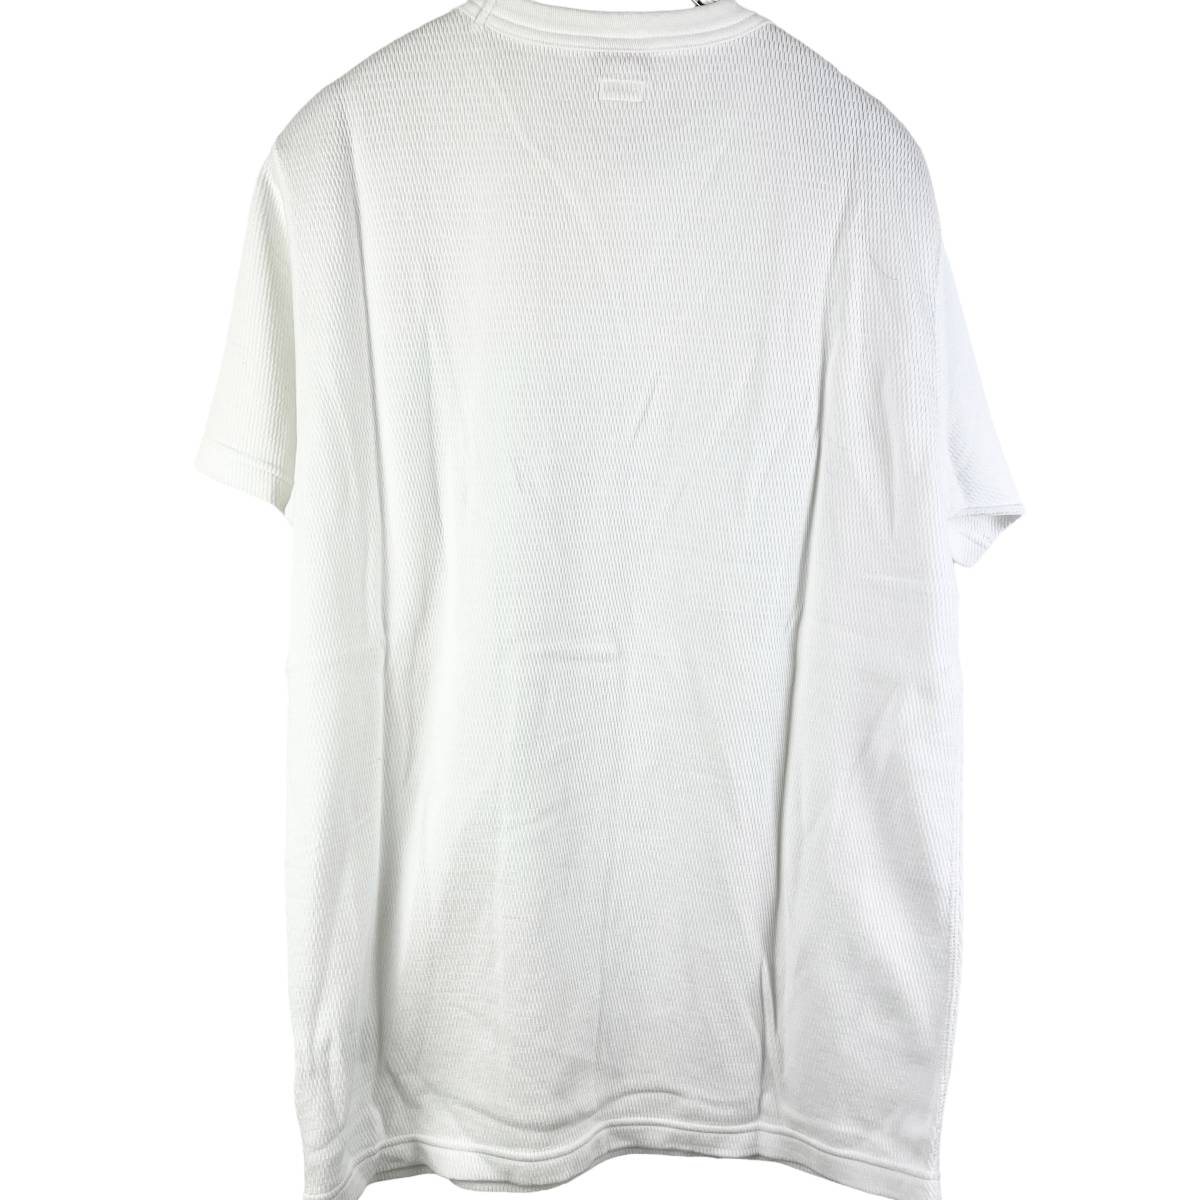 VISVIM(ビズビム) SUBLIG THERMAL CREW KNIT T Shirt (white) 2